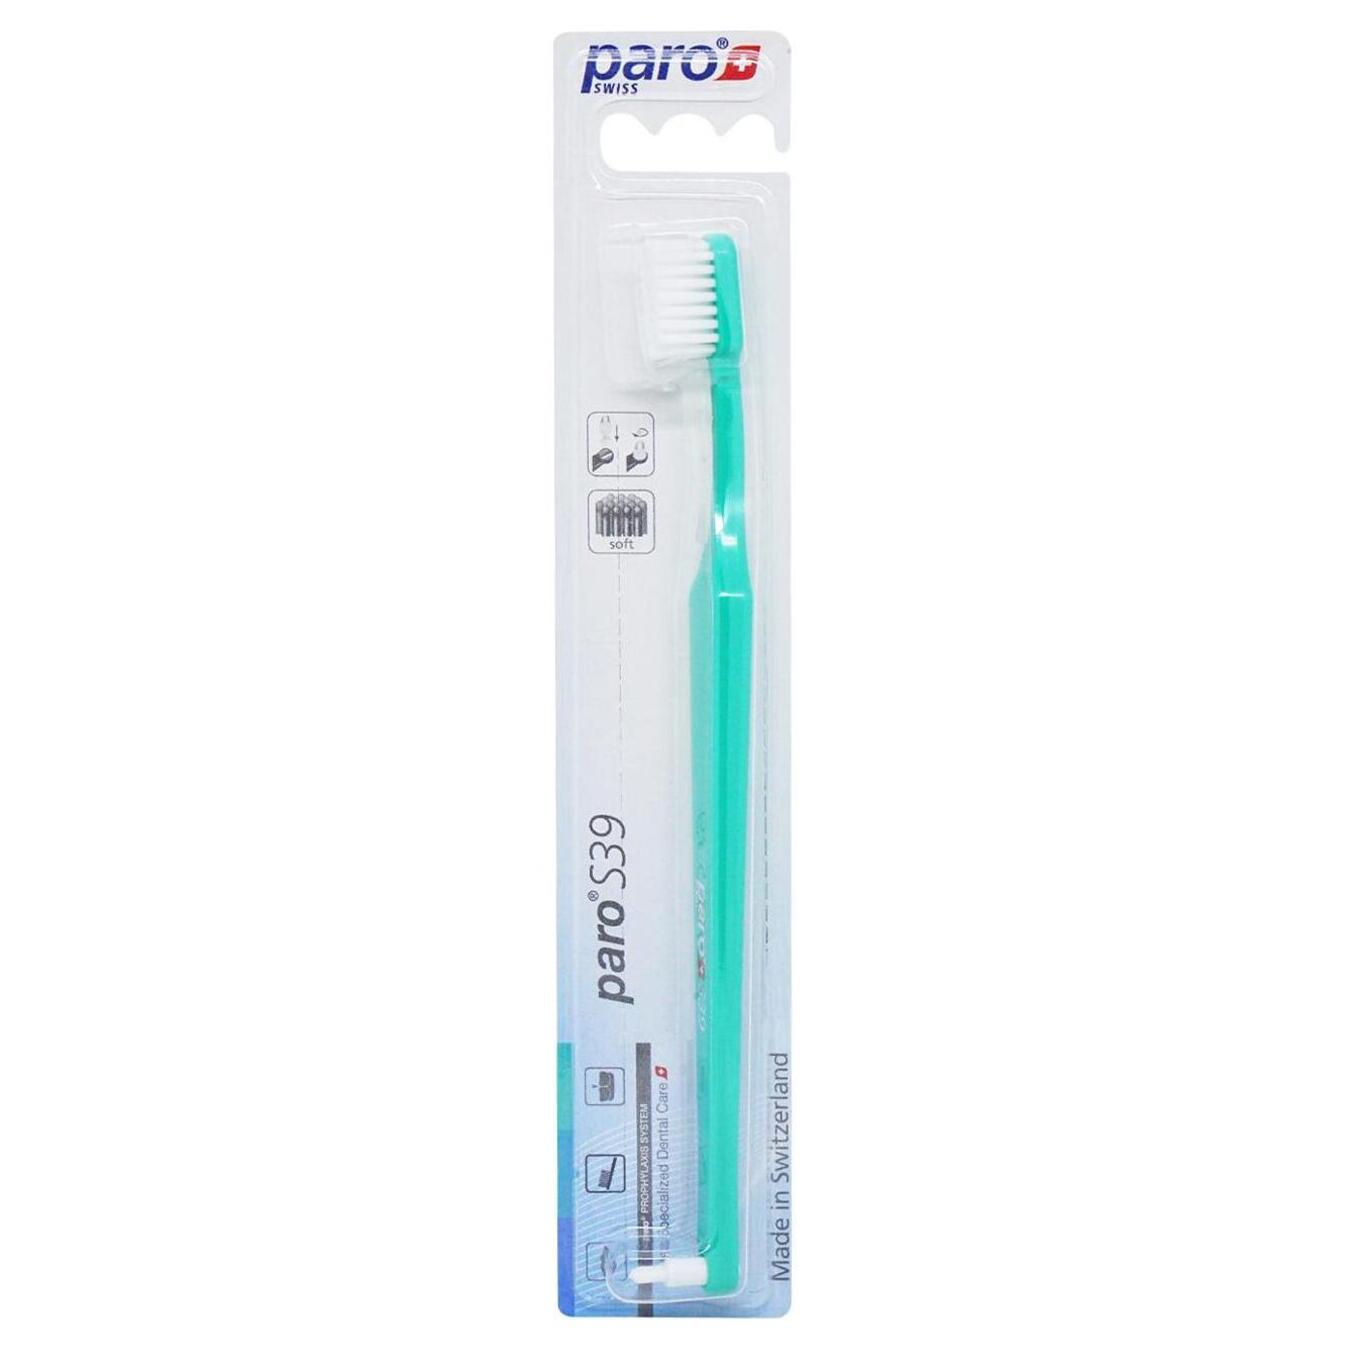 Toothbrush Paro soft 39 bundles of bristles 5 rows with a monobundle nozzle green